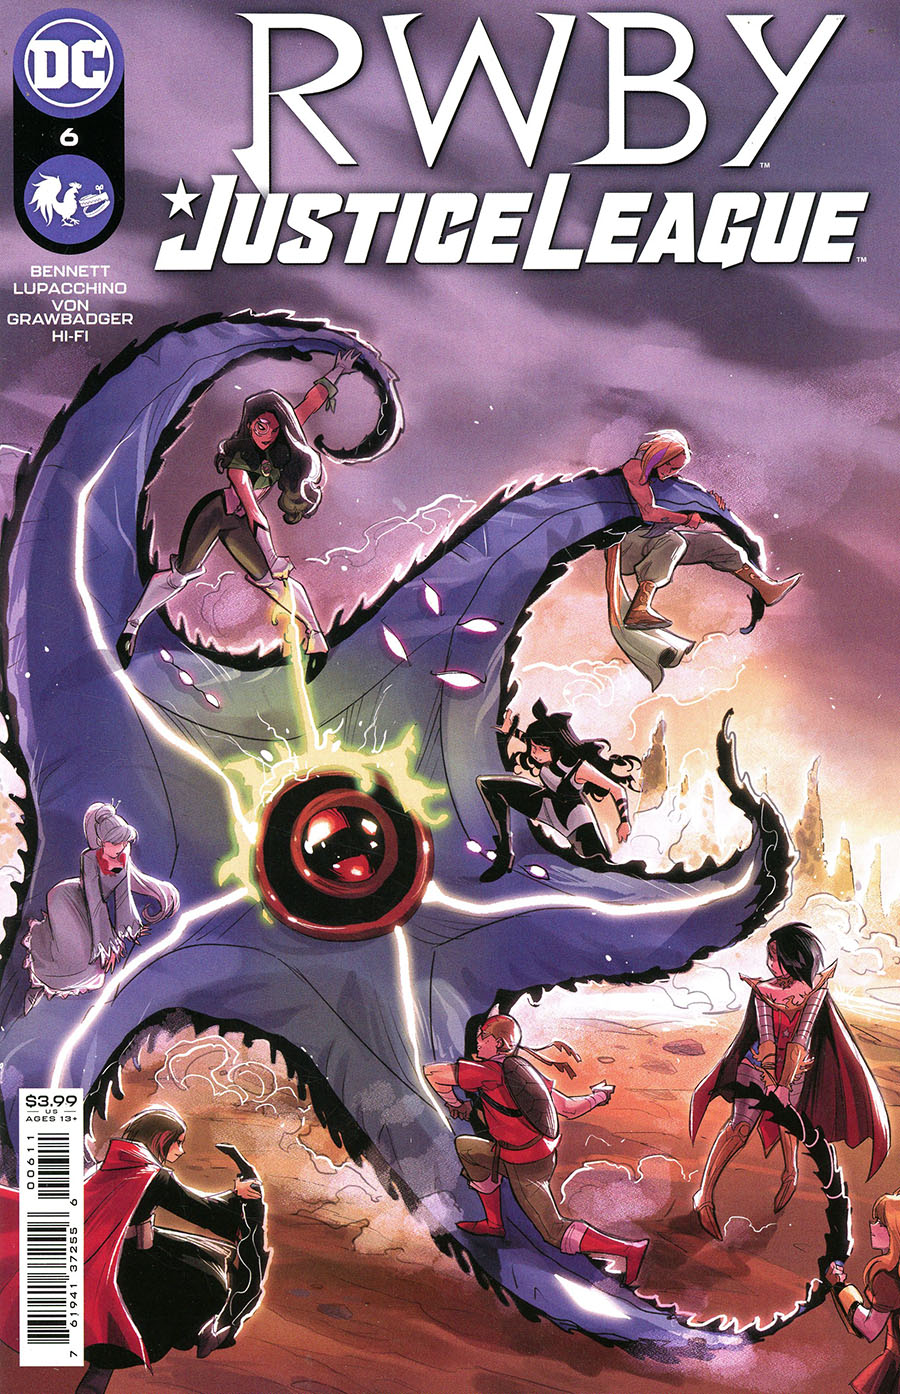 RWBY Justice League #6 Cover A Regular Mirka Andolfo Cover